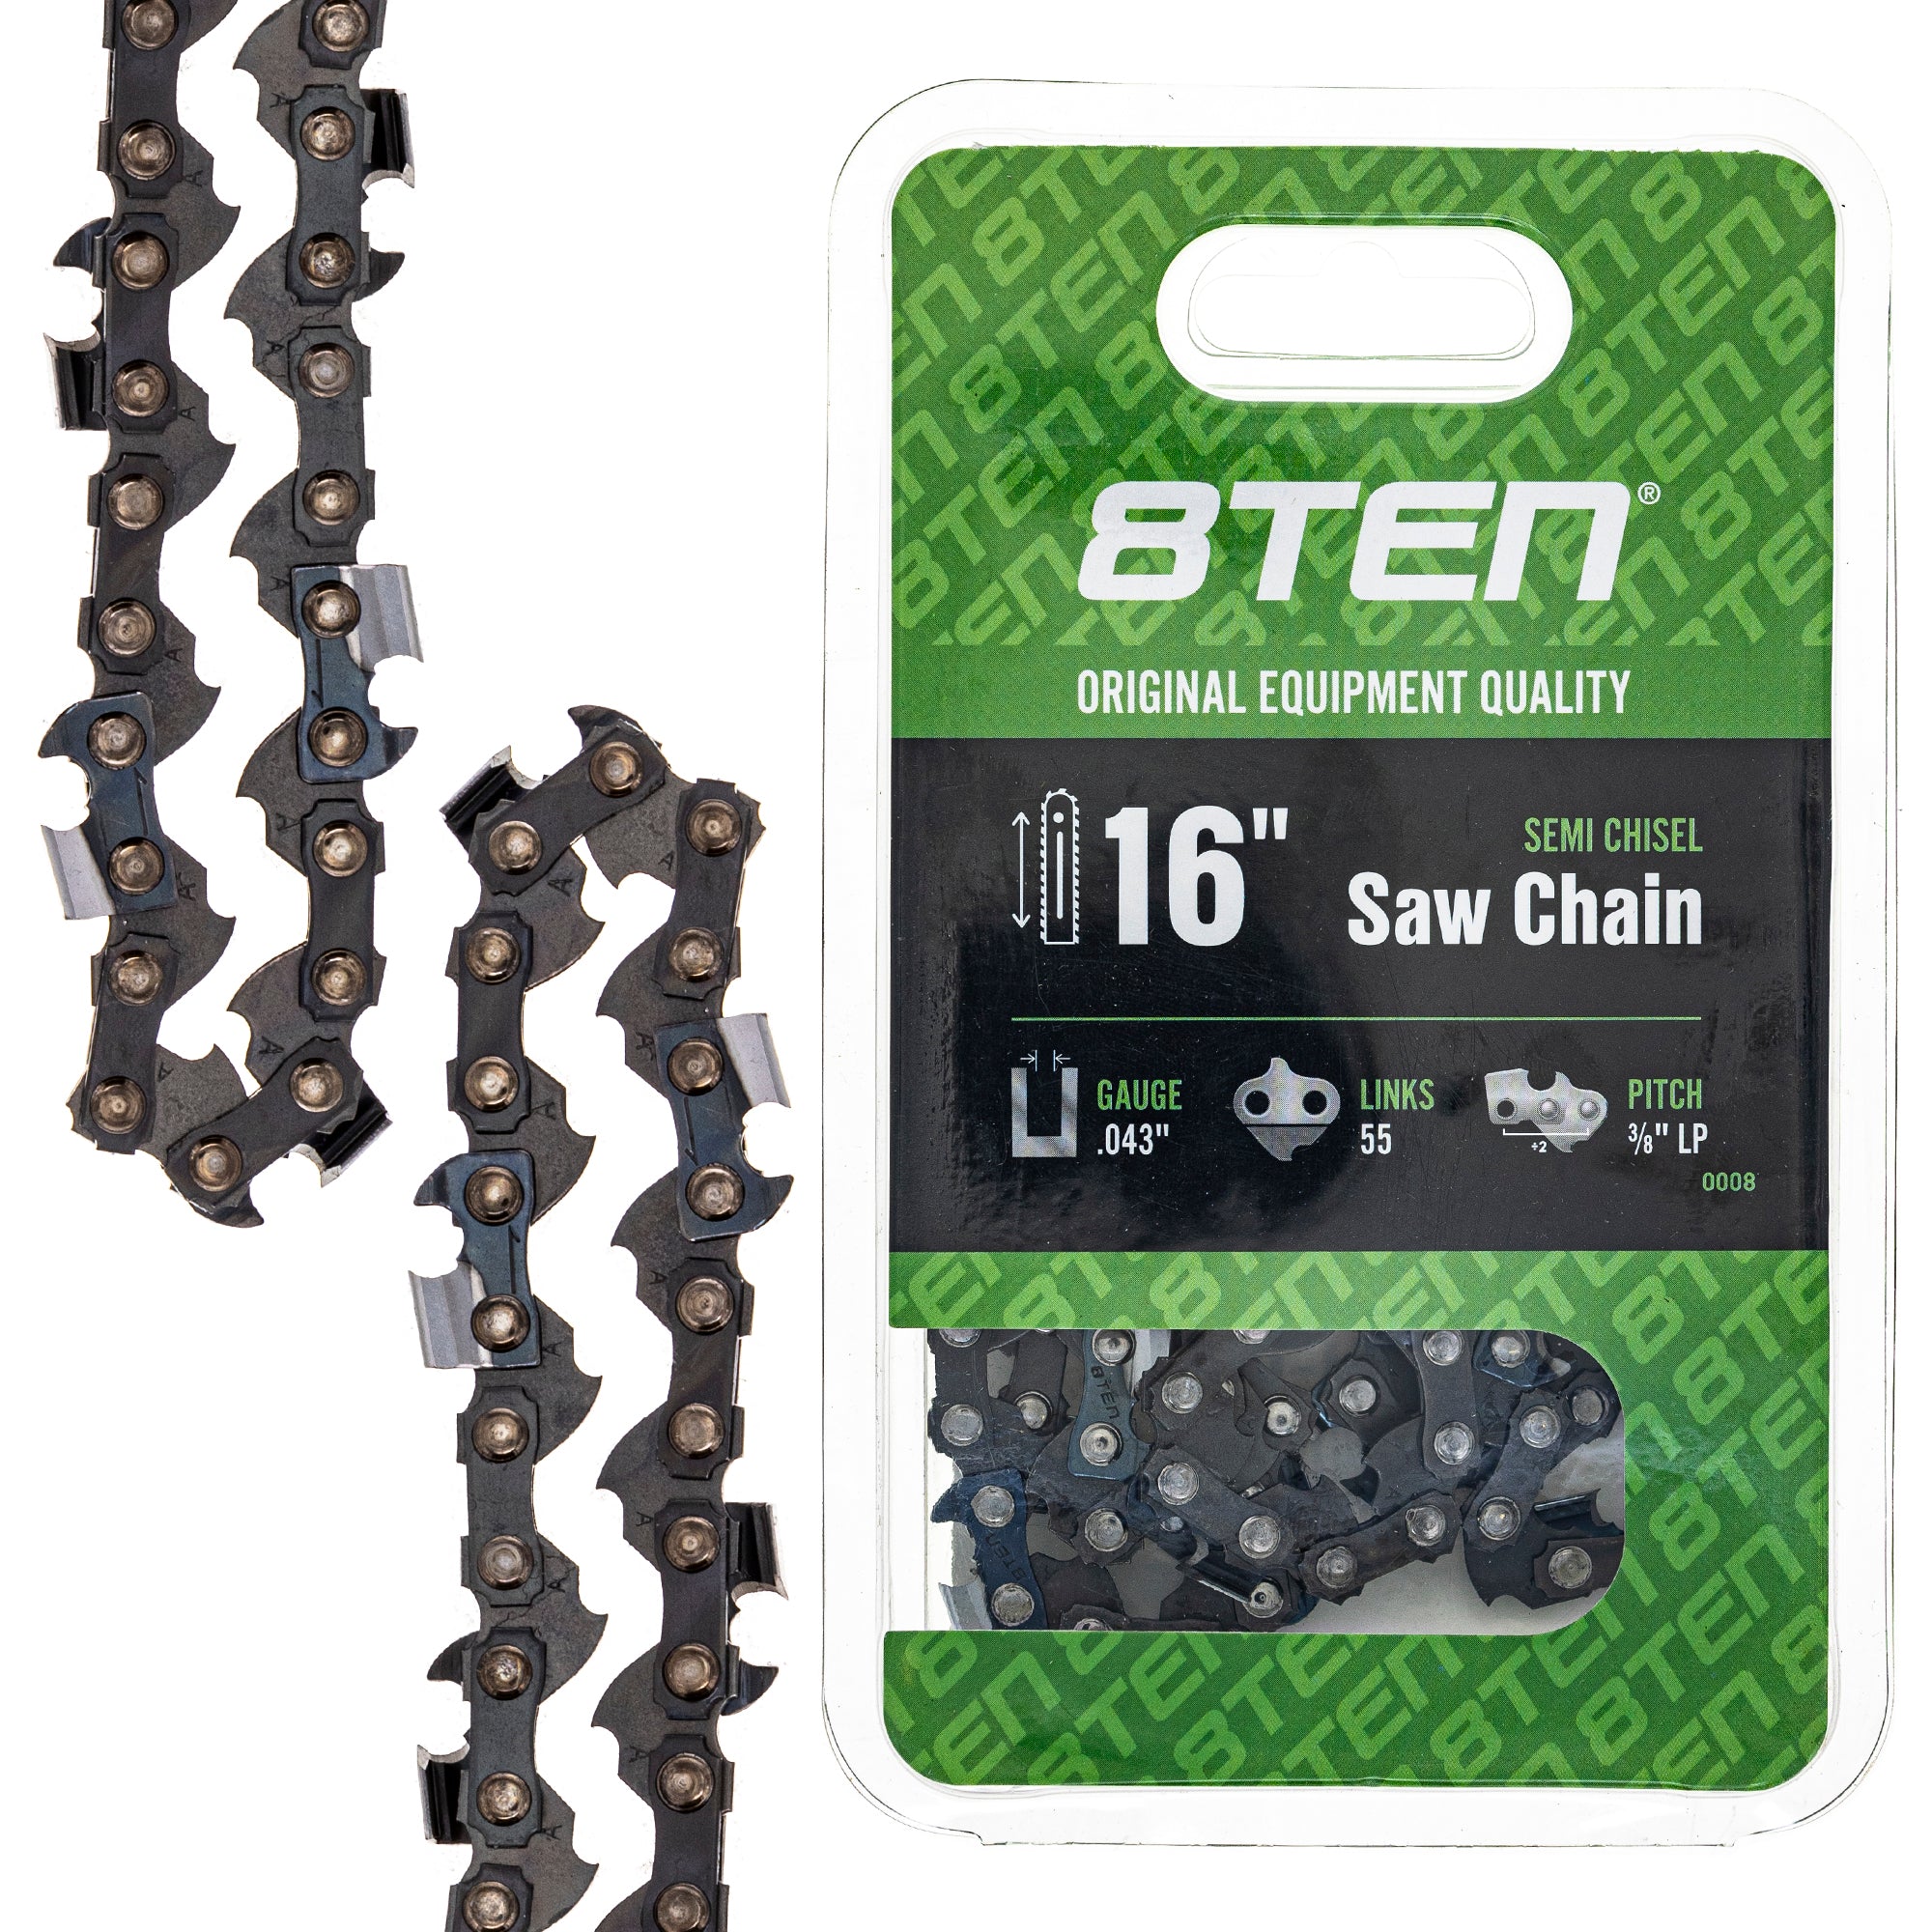 Chainsaw Chain 16 Inch .043 3/8 55DL for zOTHER Stens Oregon Ref. Oregon Carlton MSE MSA 8TEN 810-CCC2220H